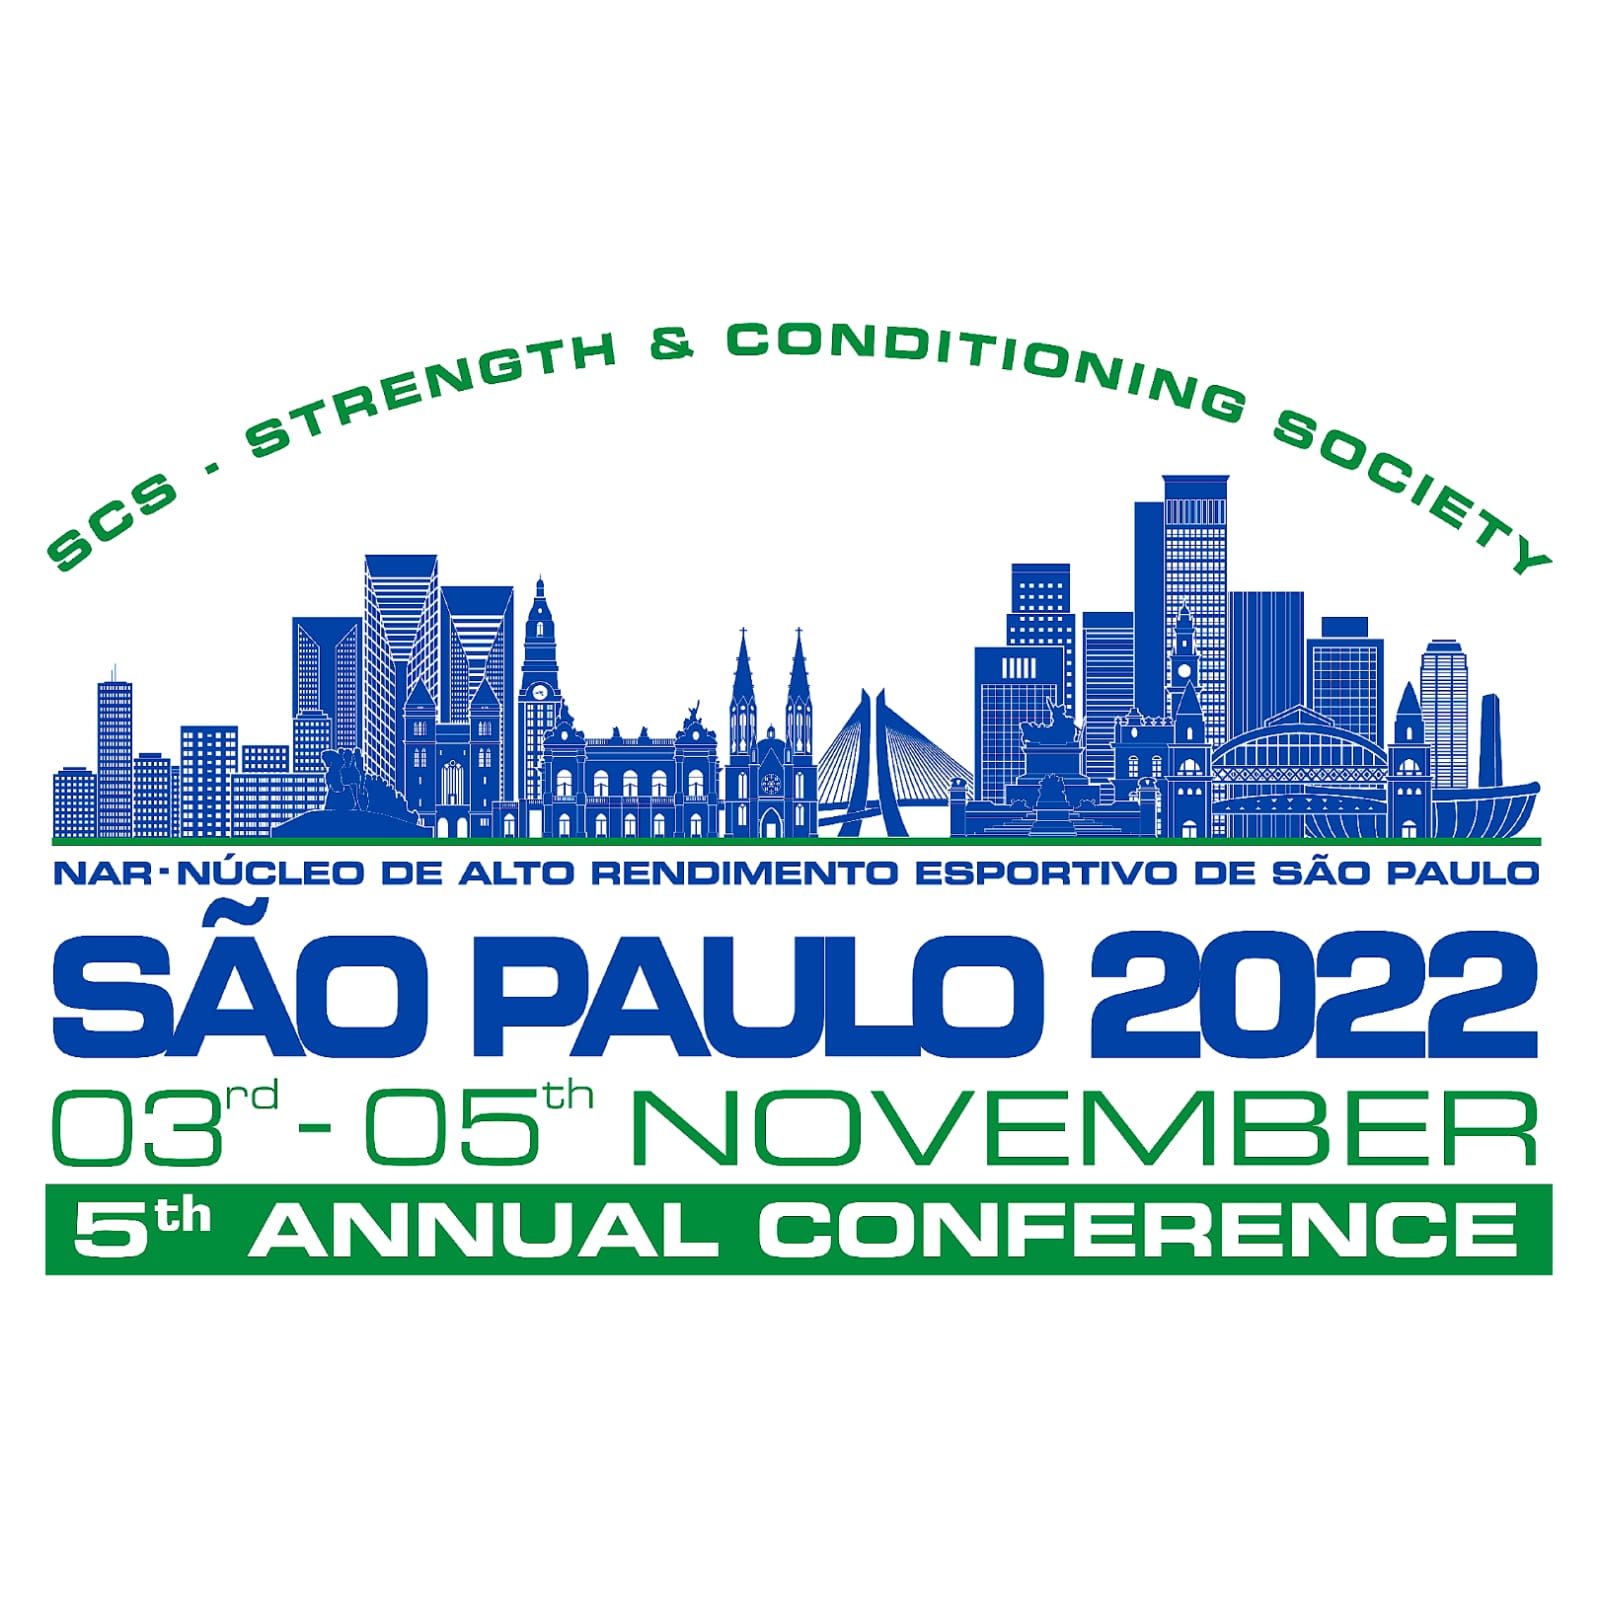 “5ª Conferência Anual da Strength & Conditioning Society (SCS)”